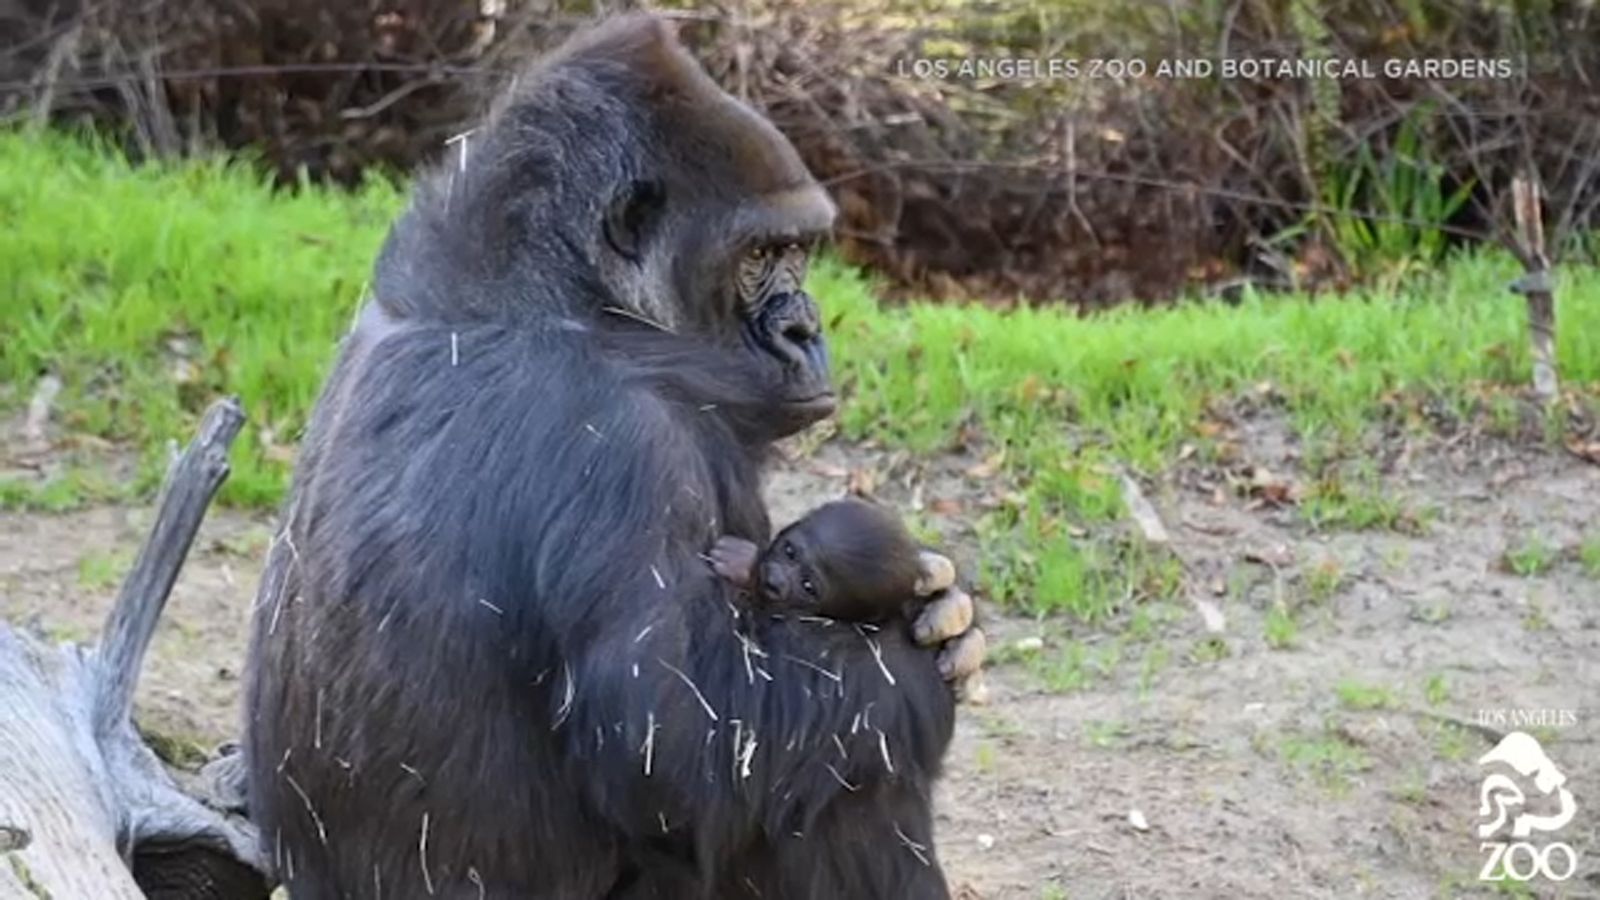 Baby gorilla: Western lowland gorilla born at California zoo is a